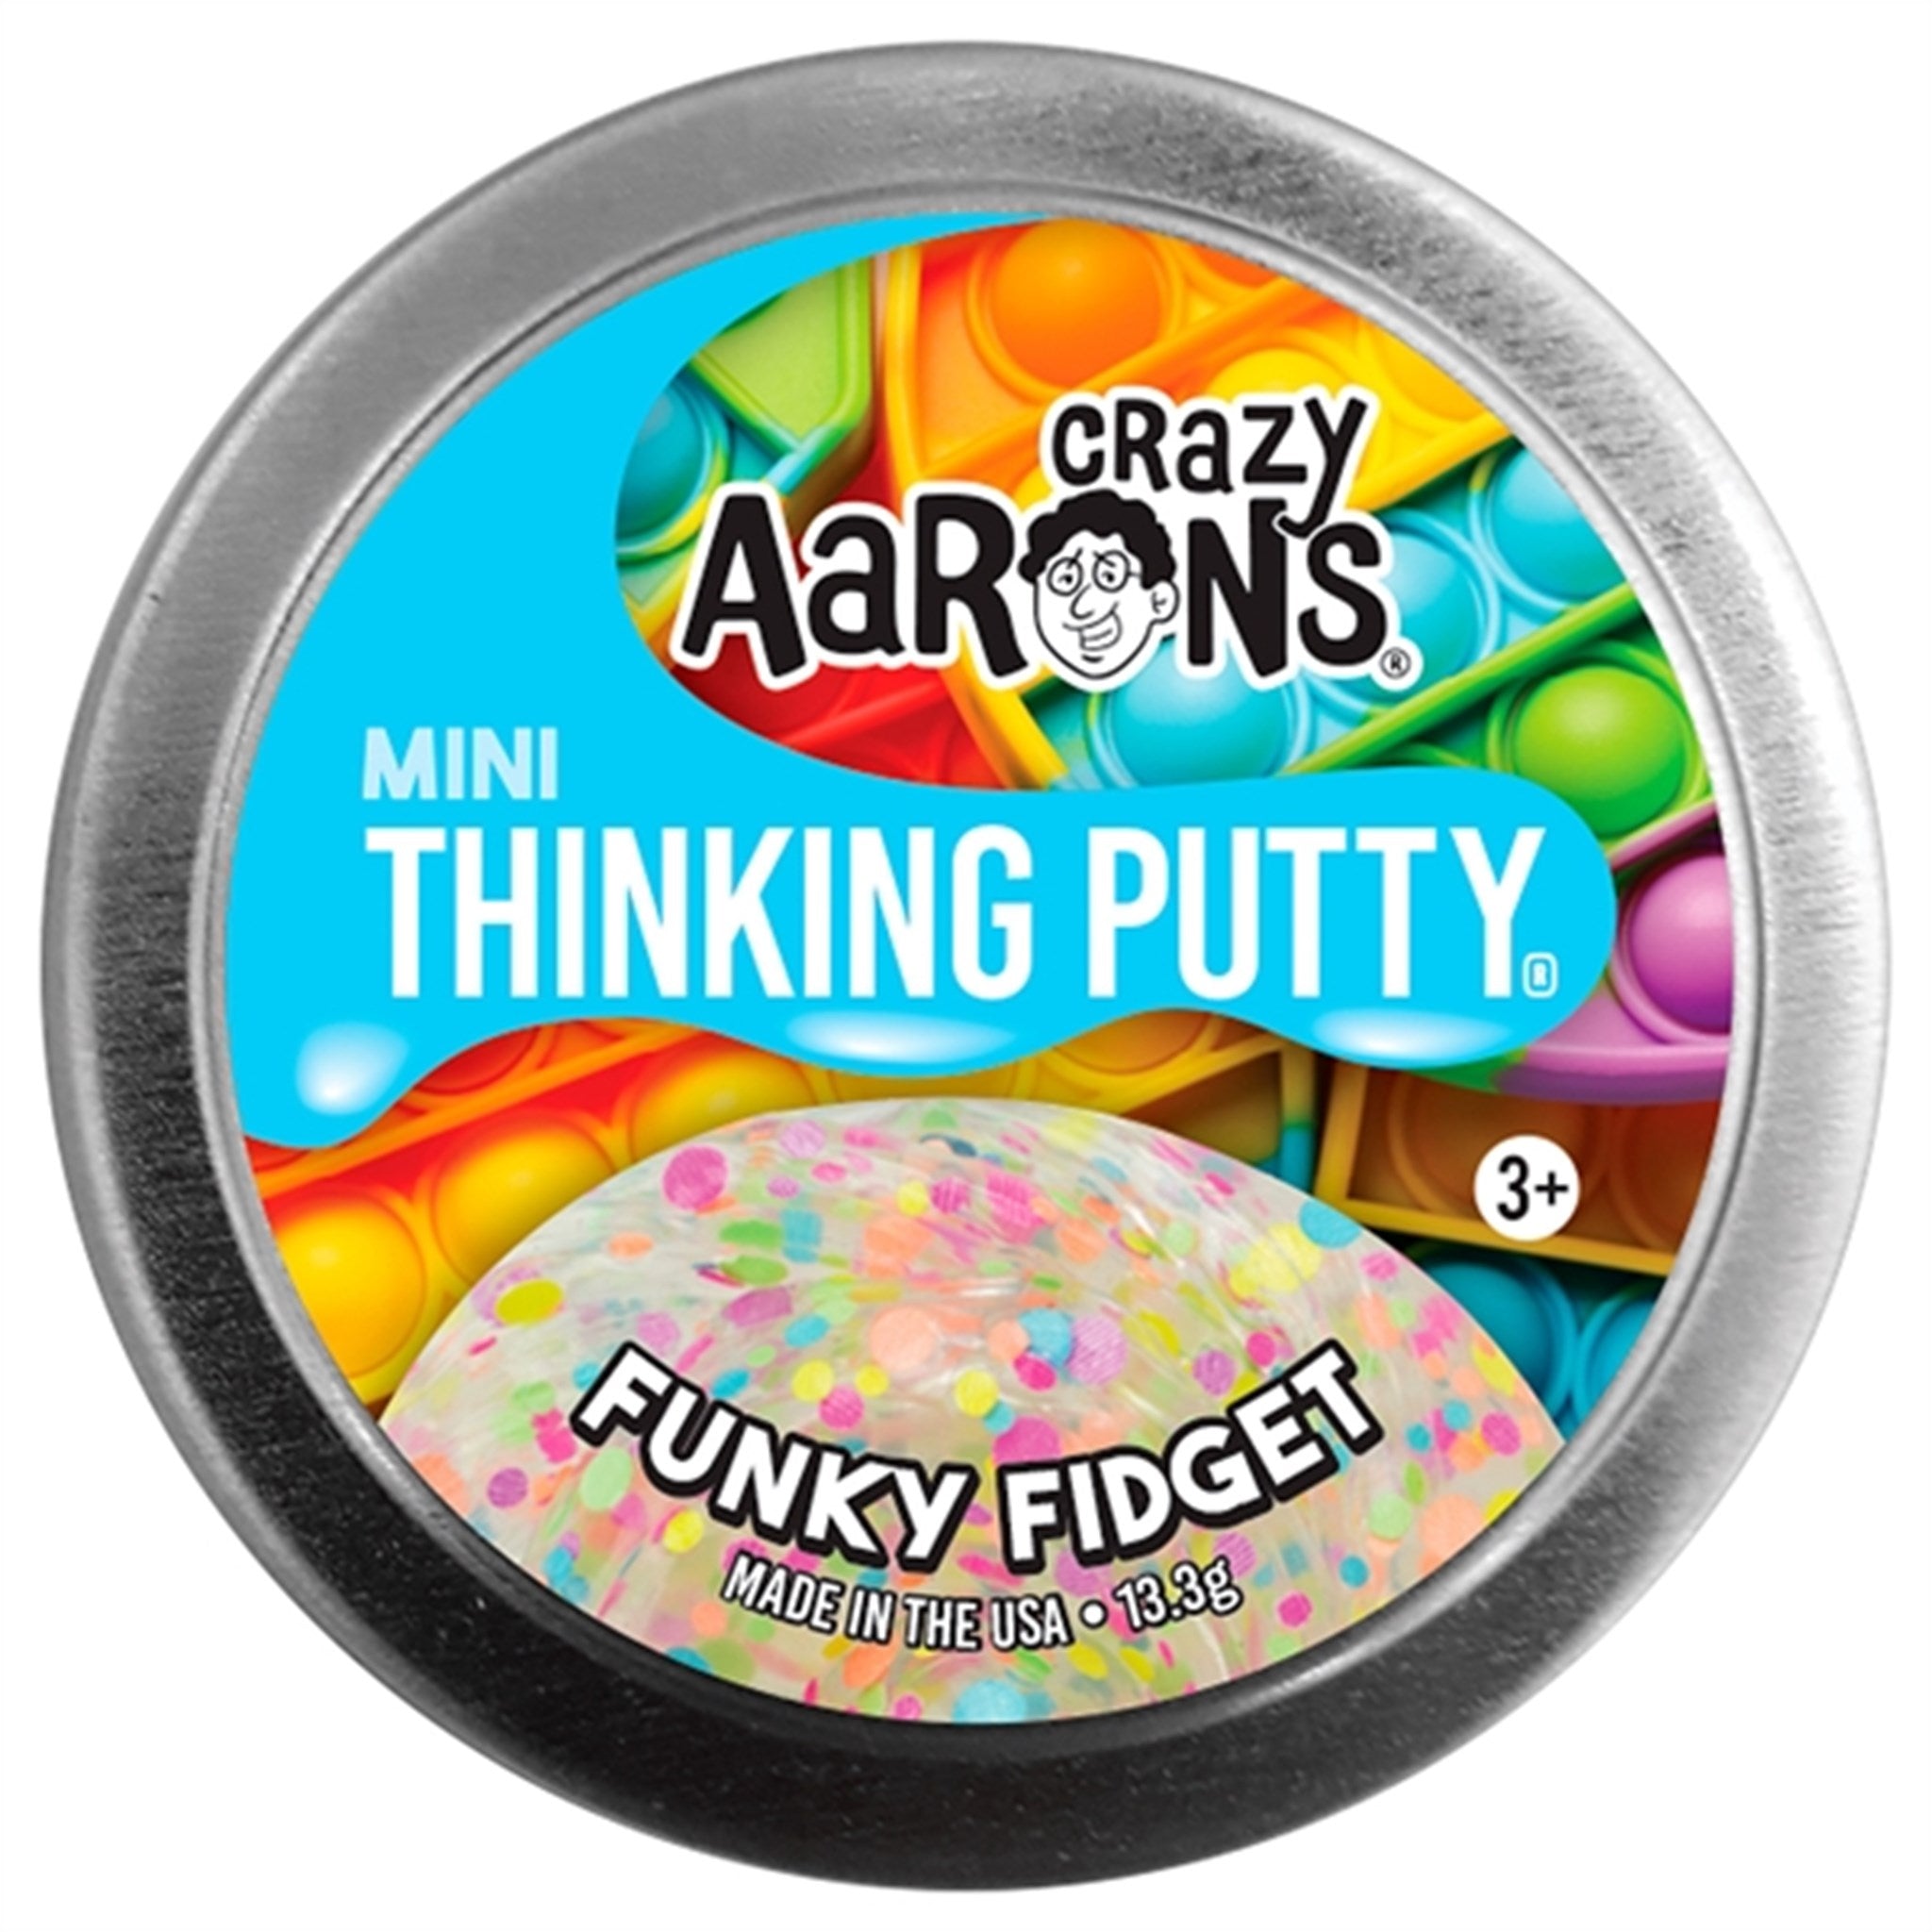 Crazy Aaron's® Thinking Putty Mini Tins - Funky Fidget